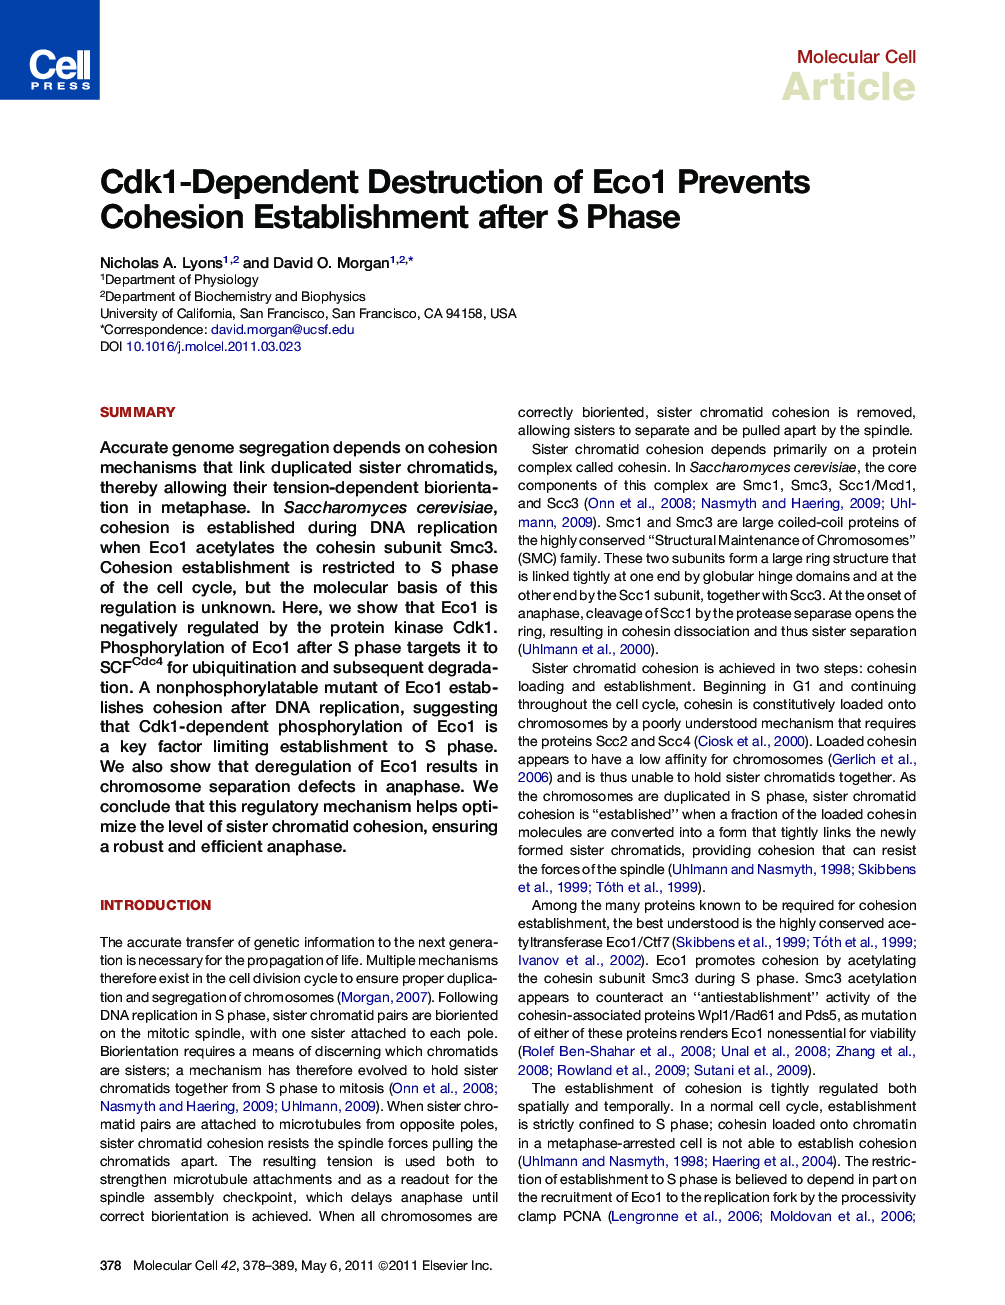 Cdk1-Dependent Destruction of Eco1 Prevents Cohesion Establishment after S Phase